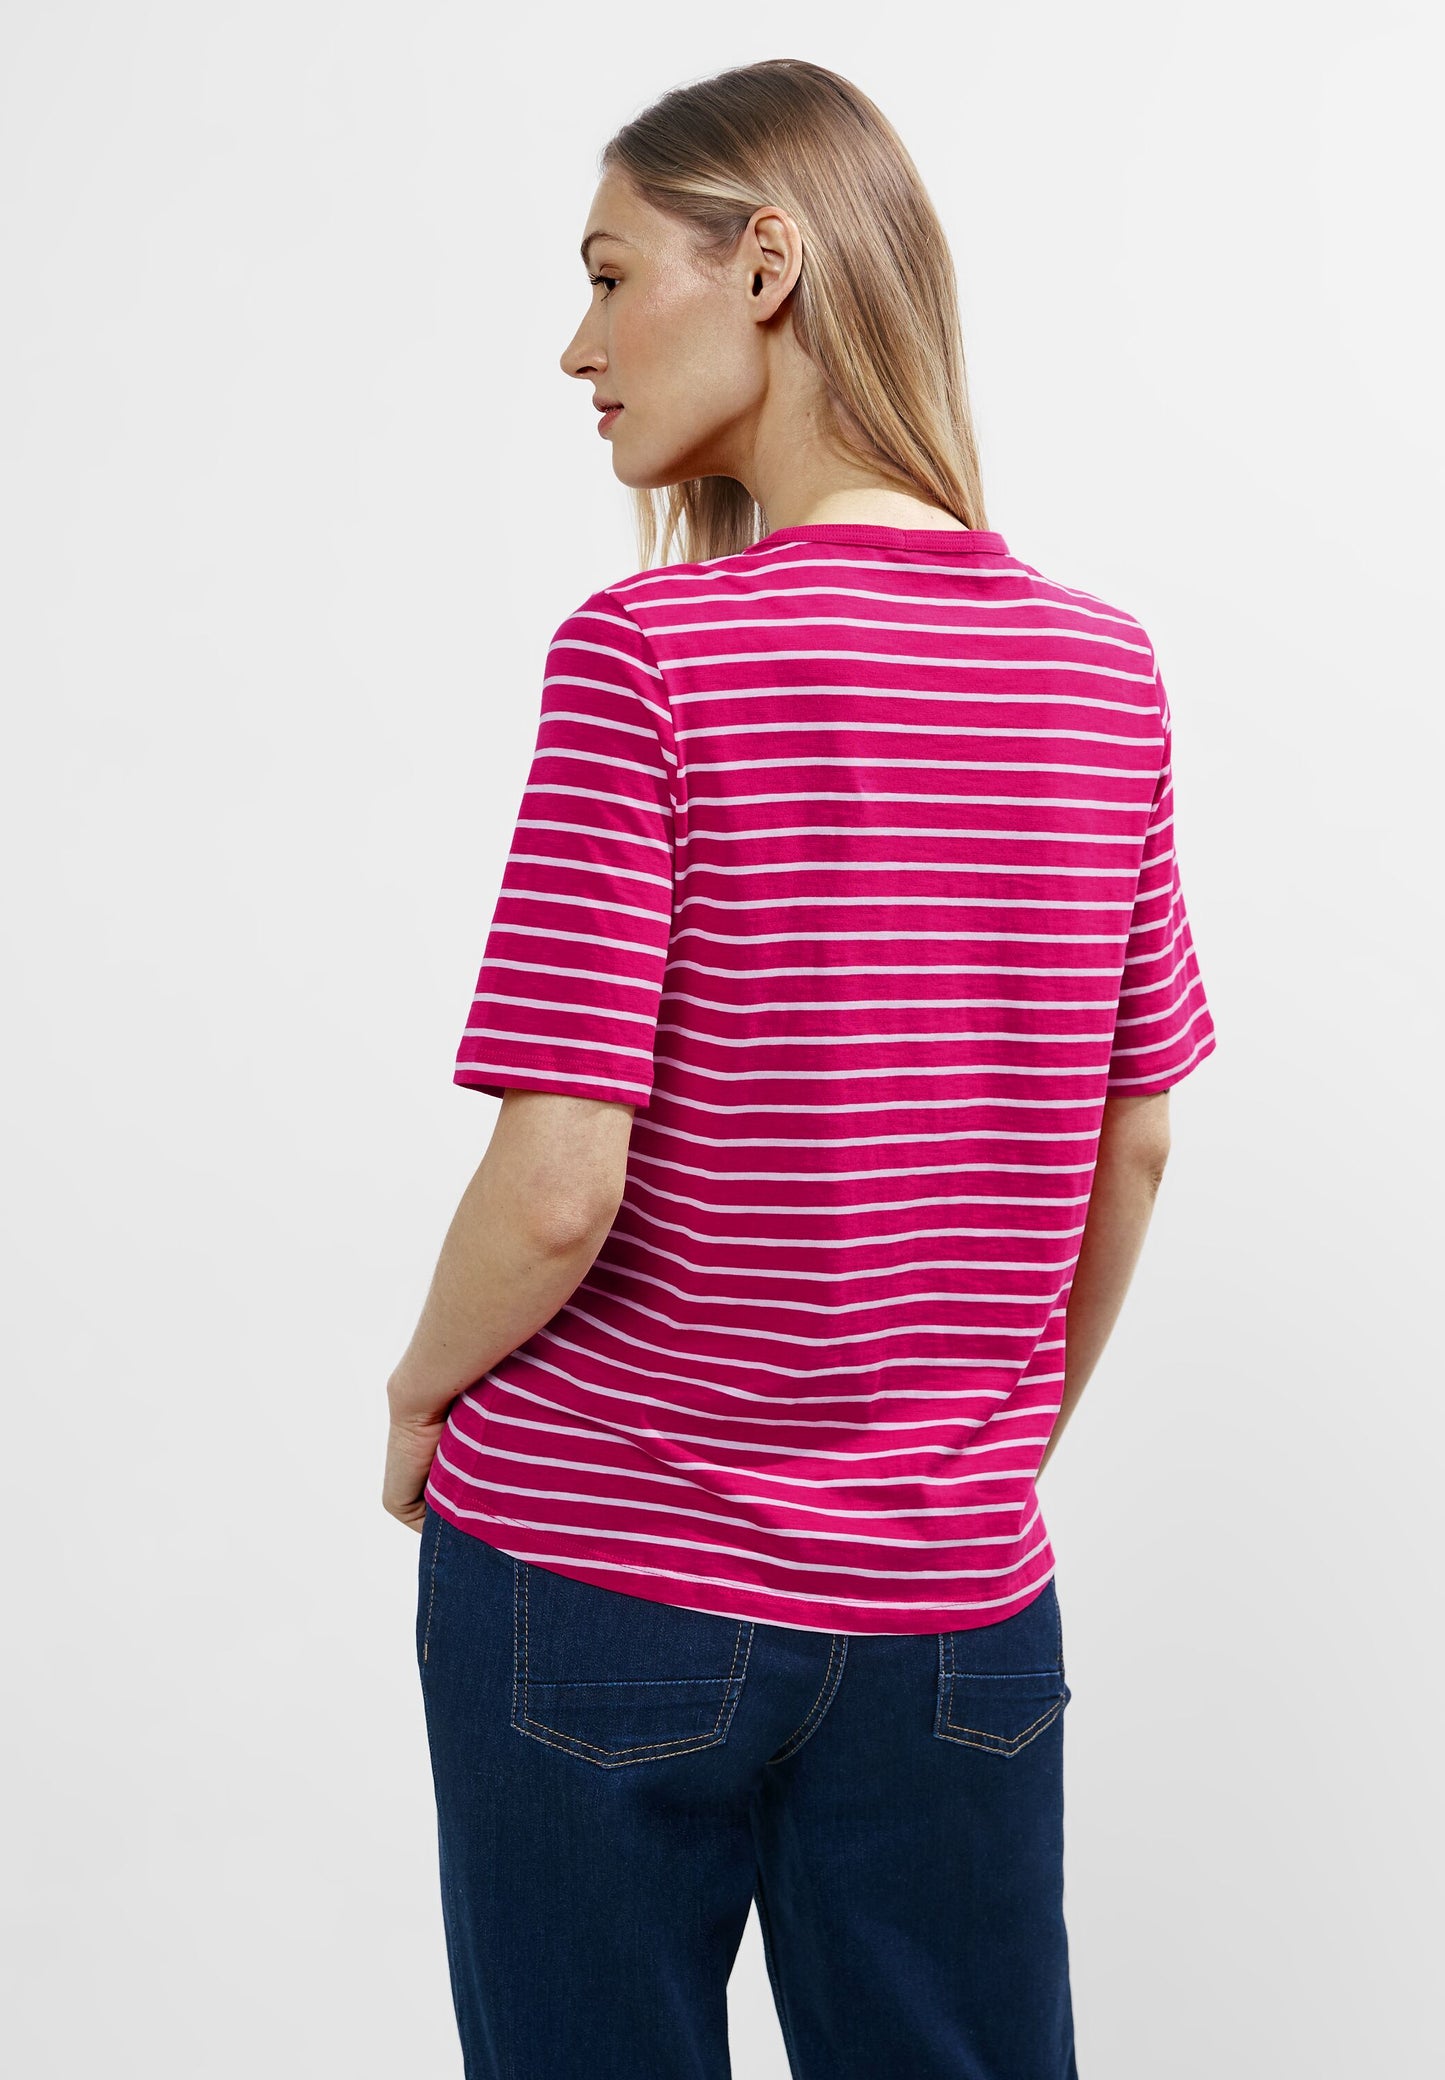 CECIL - Flammgarn Streifenshirt - pink